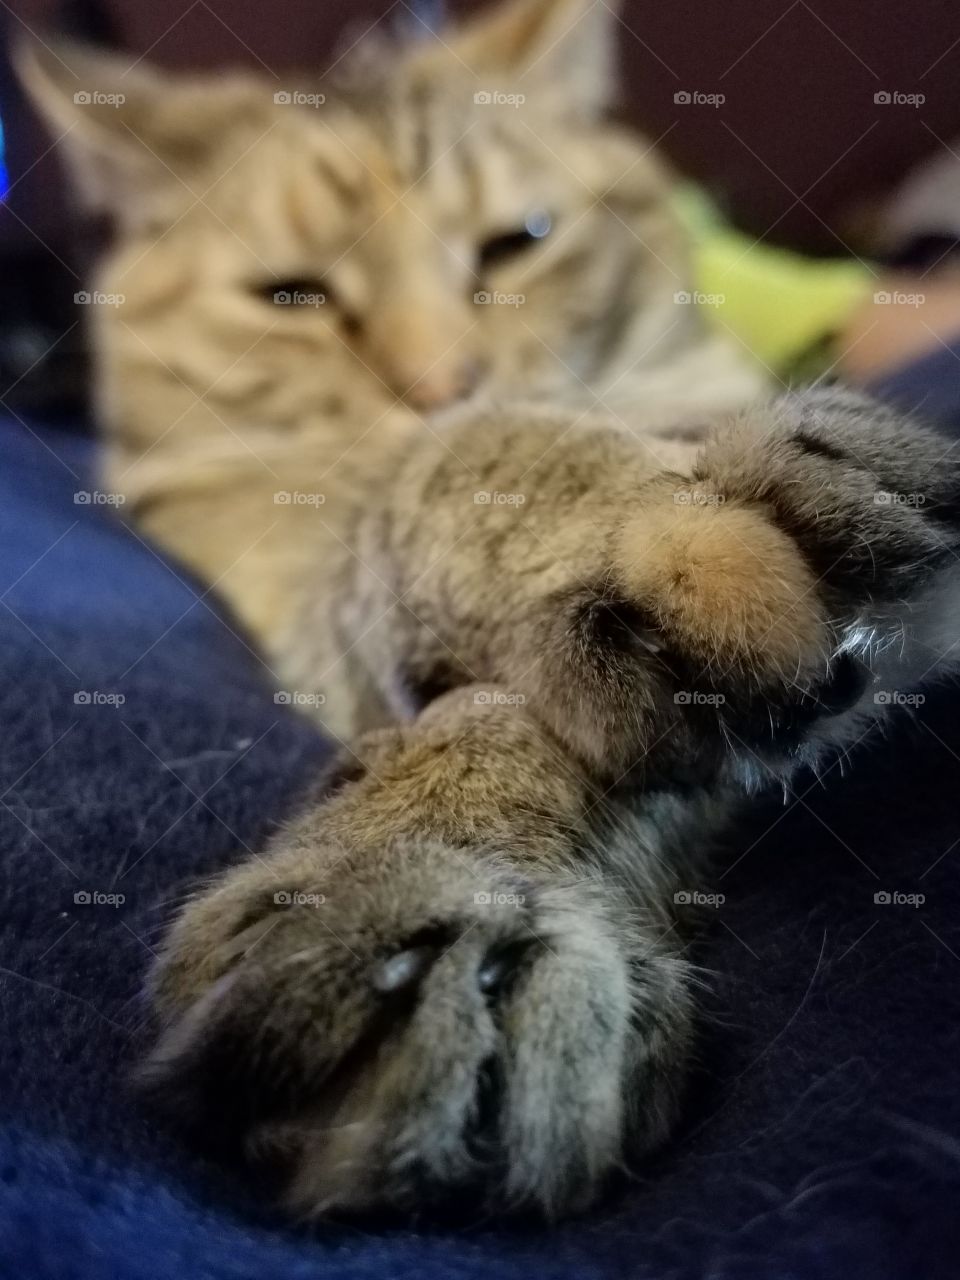 Sleepy paws